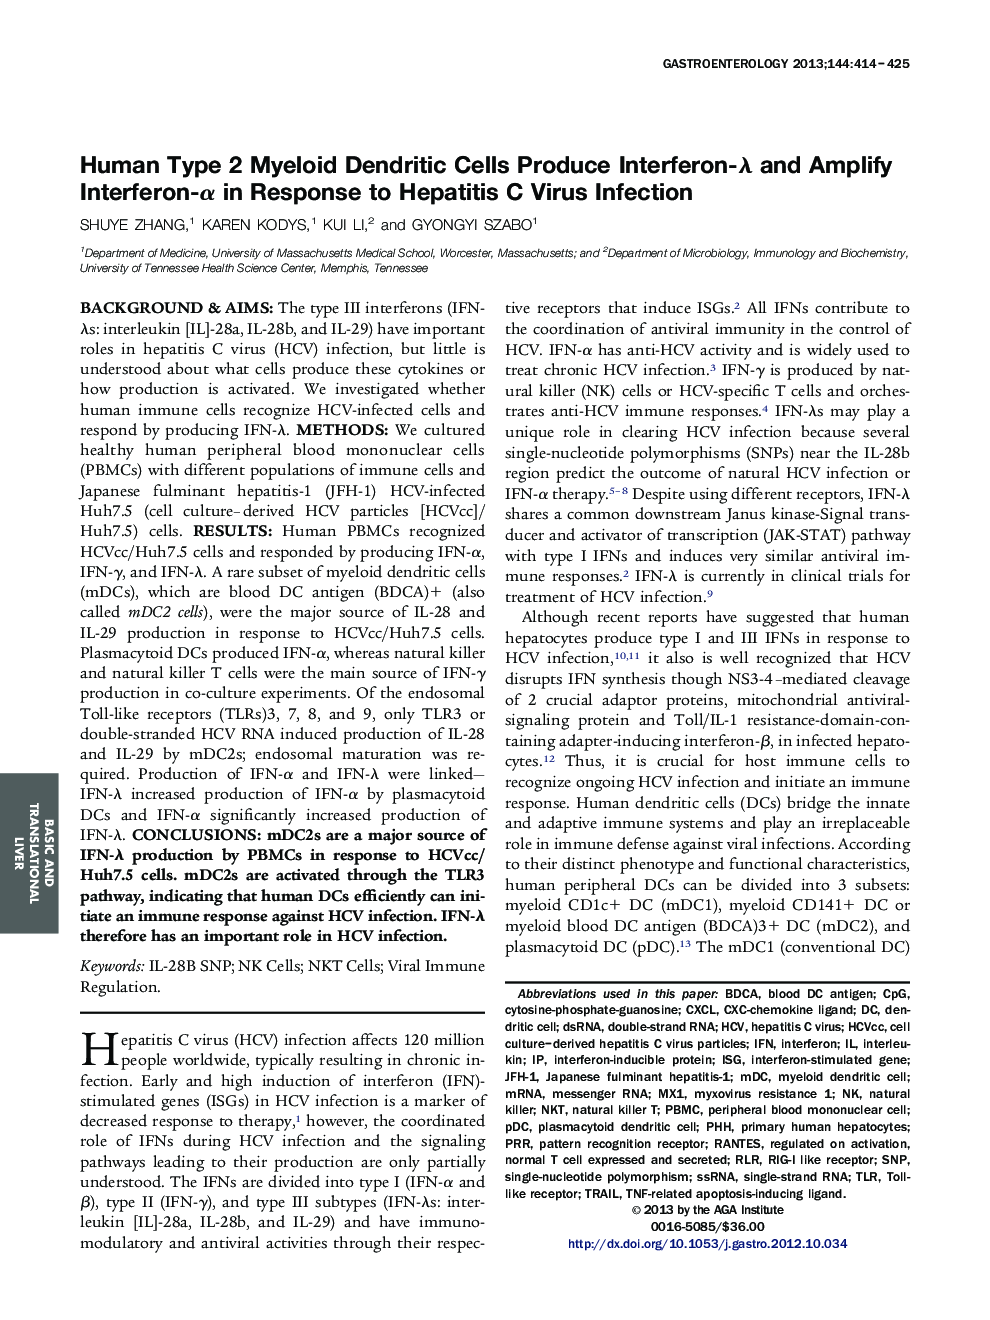 Human Type 2 Myeloid Dendritic Cells Produce Interferon-Î» and Amplify Interferon-Î± in Response to Hepatitis C Virus Infection